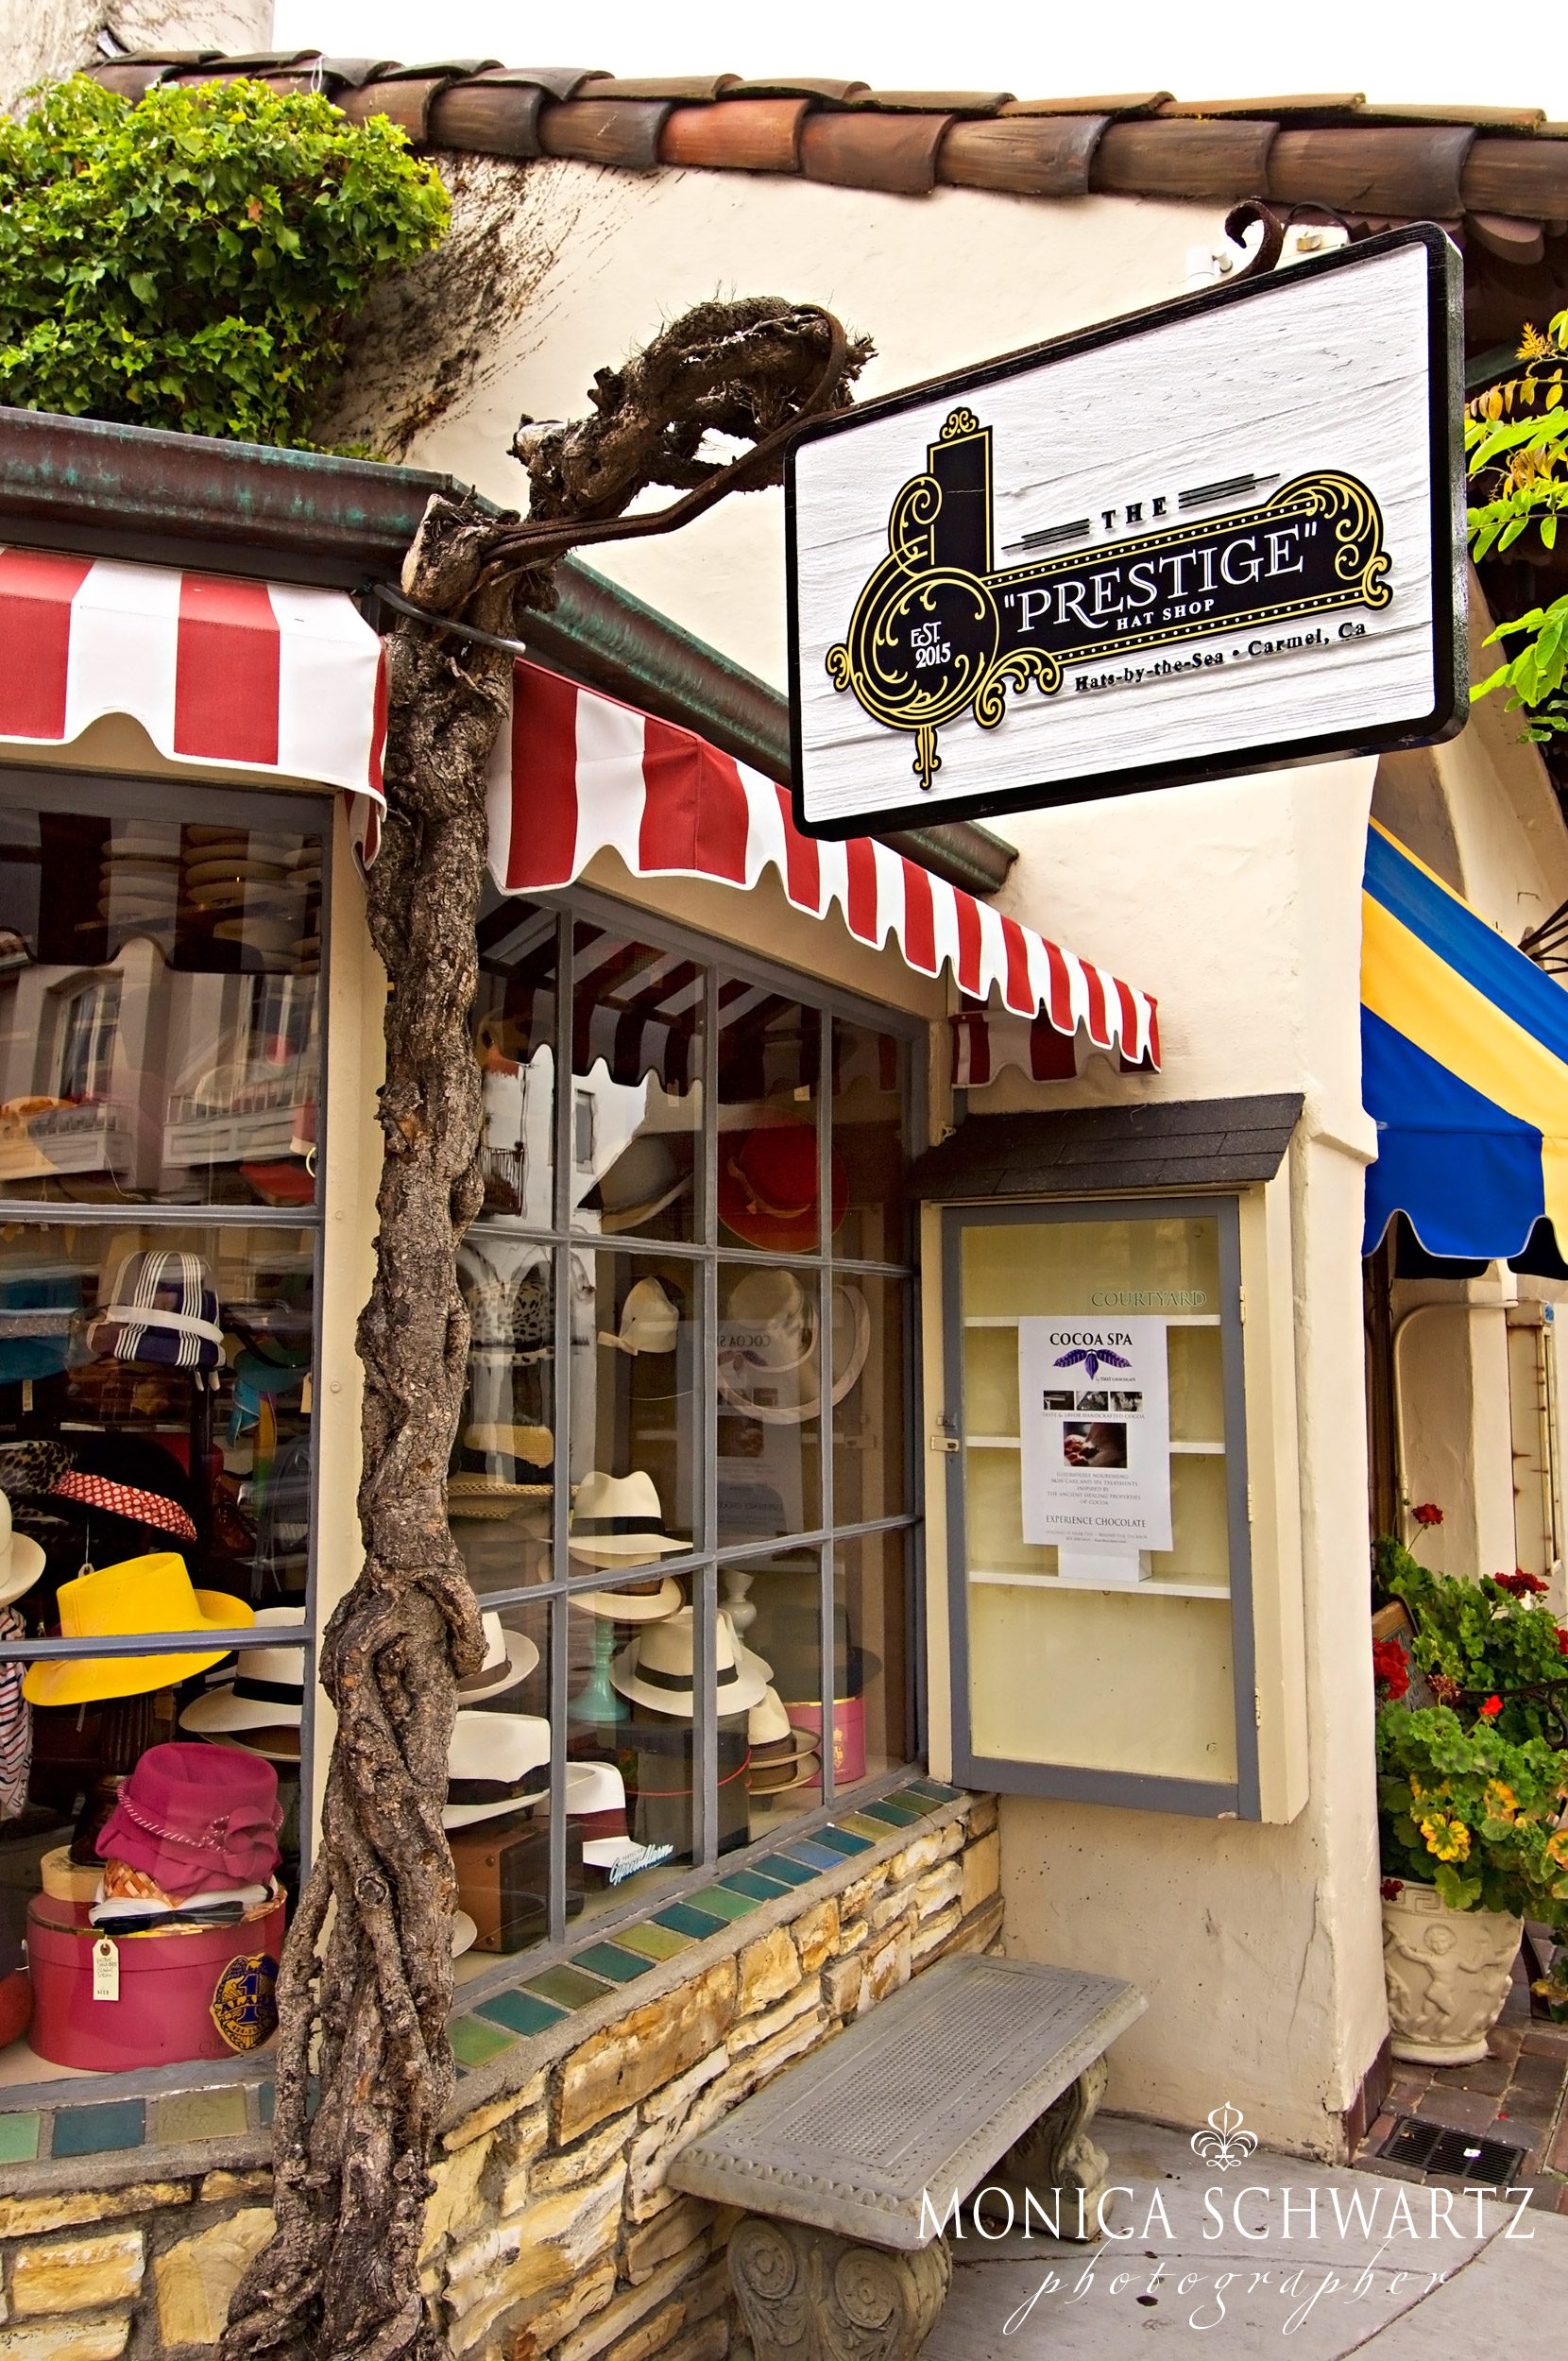 The-Prestige-hat-shop-in-Carmel-by-the-Sea-California